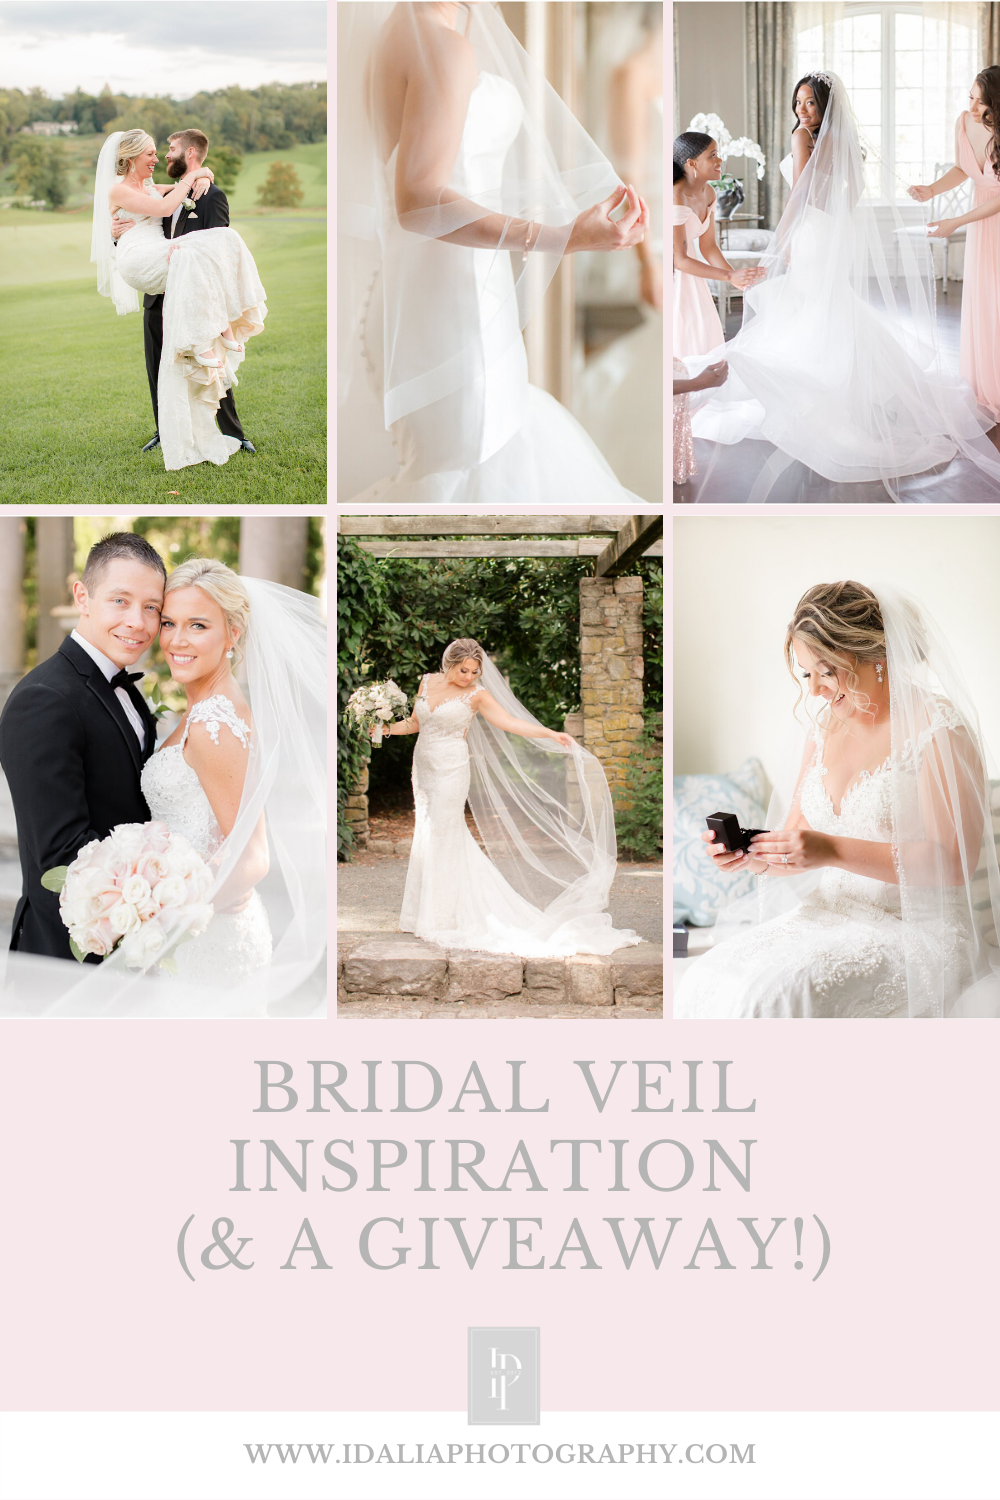 Bridal Veil Inspiration & a Giveaway!